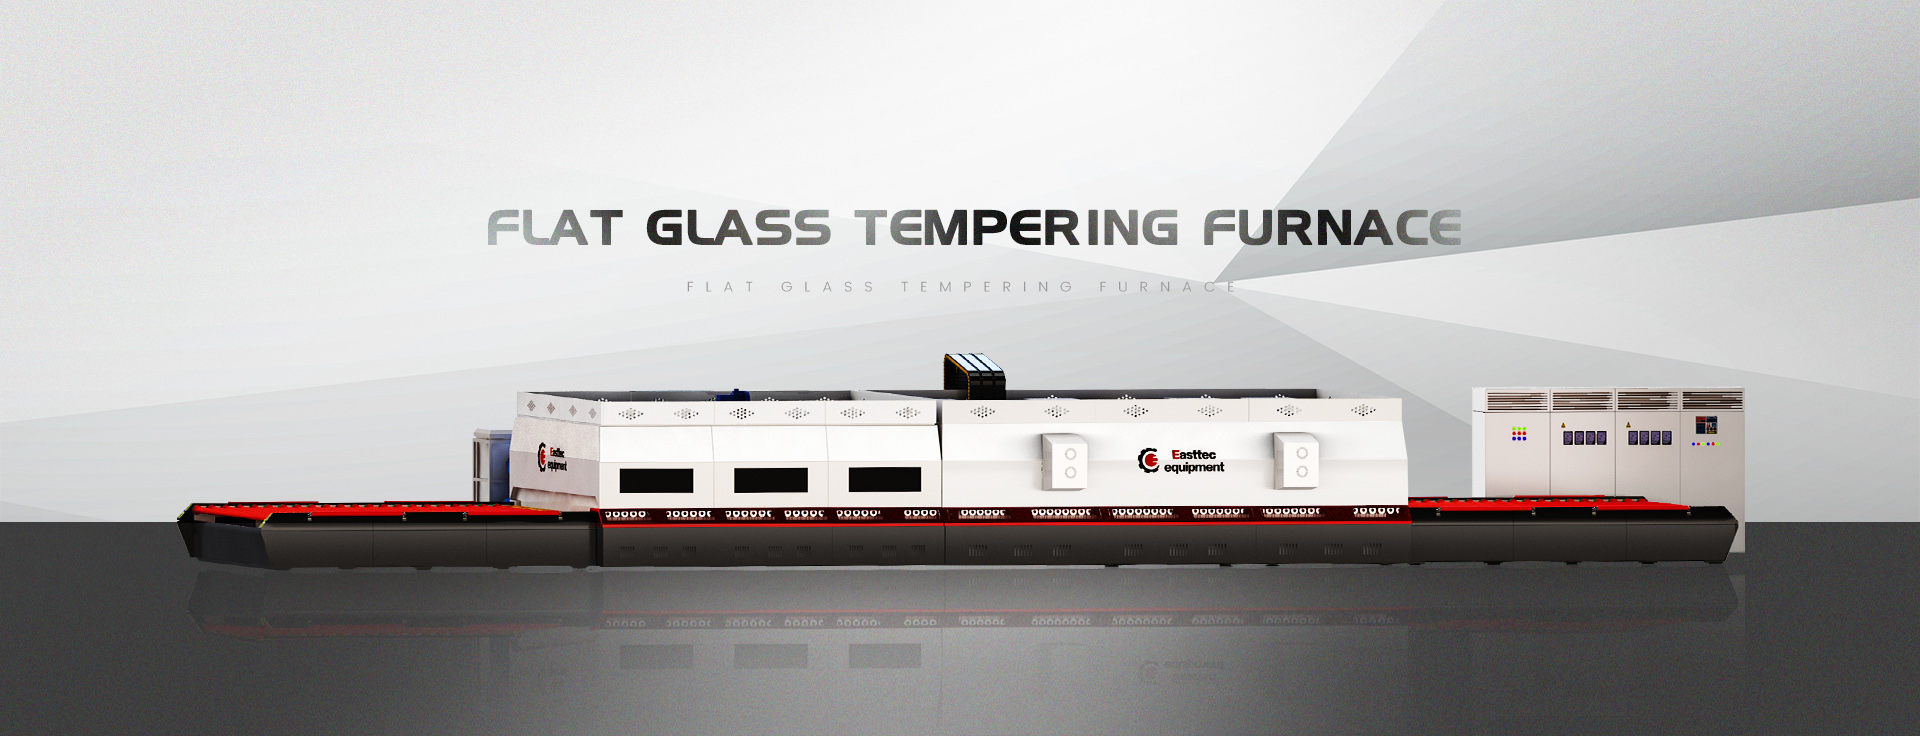 I-Flat Glass Tempering Furnace